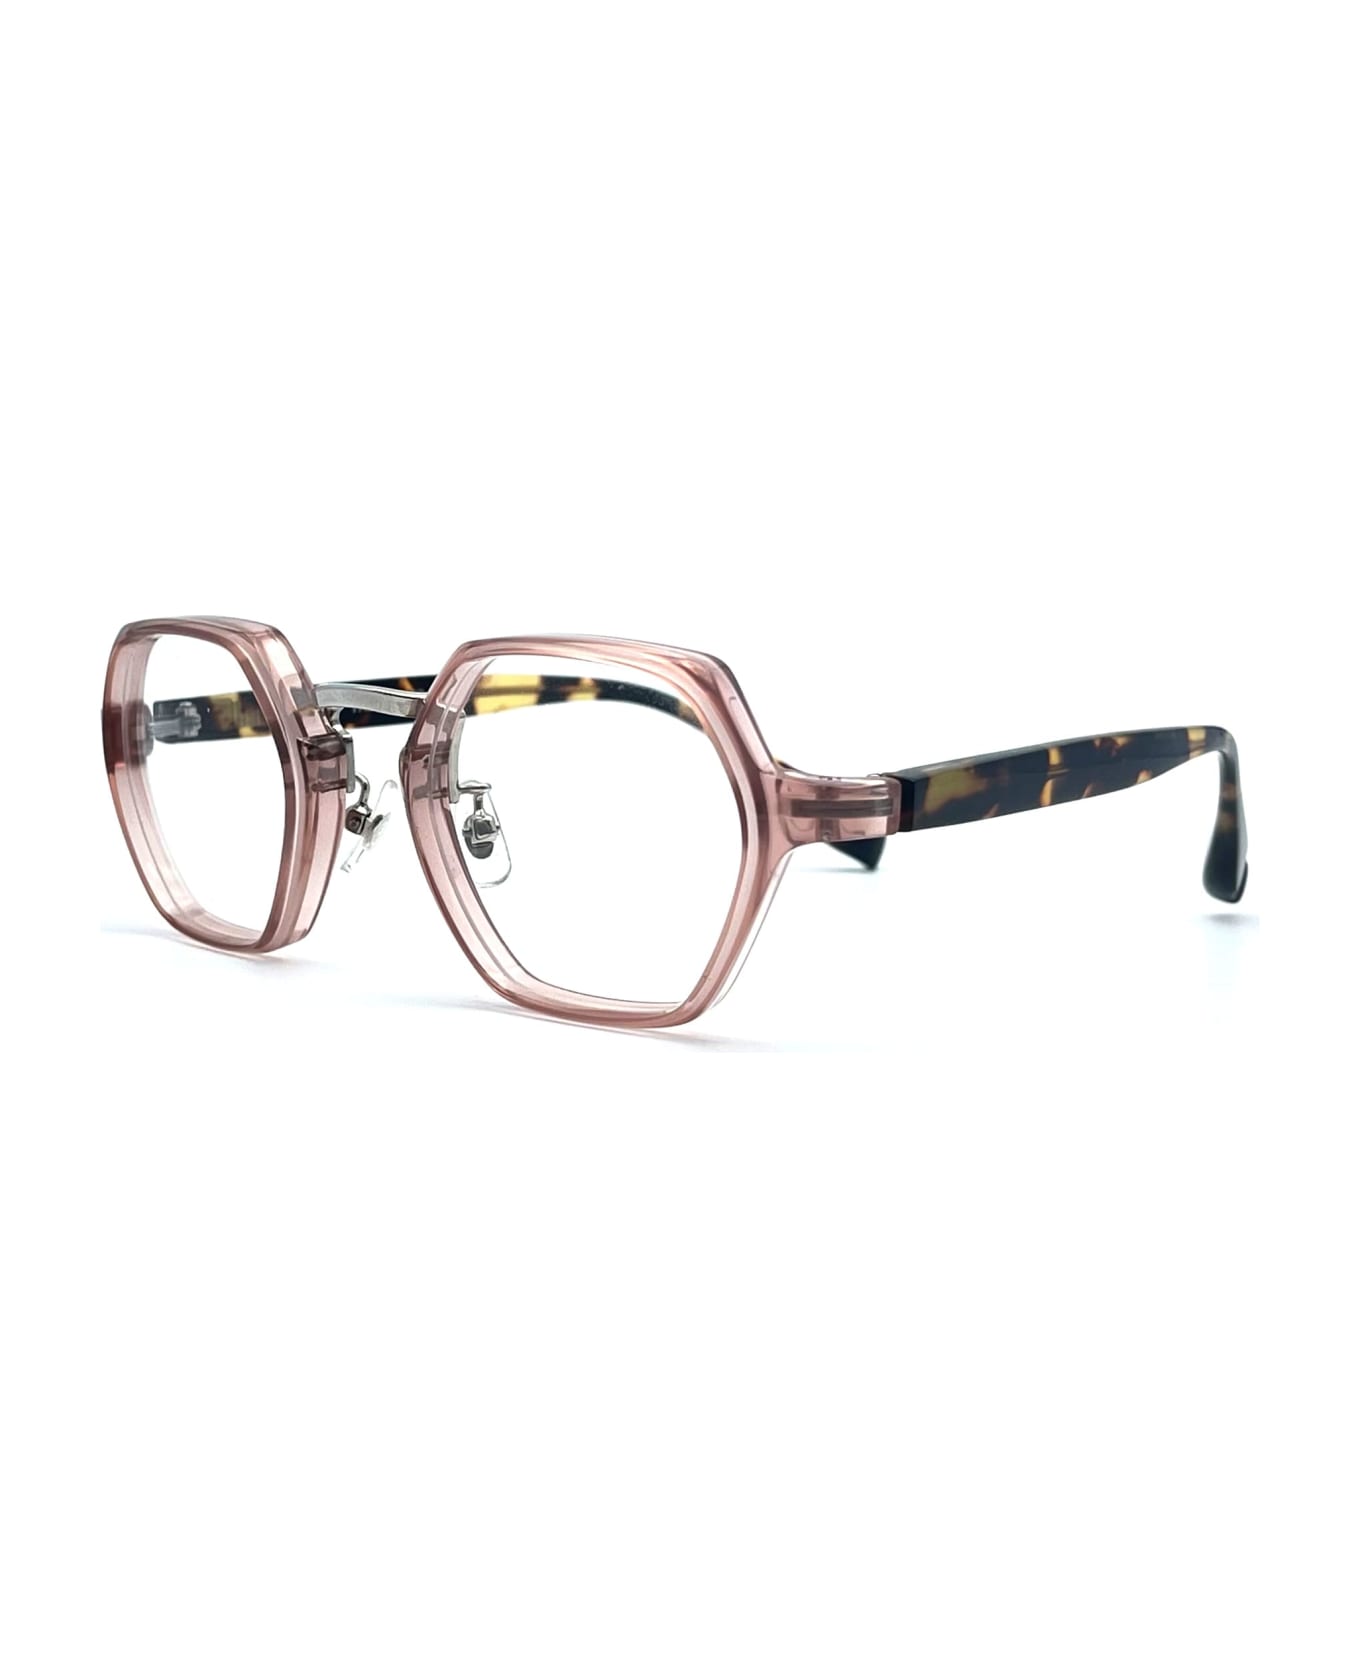 FACTORY900 Rf-057 - 322 Glasses - pink/tortoise アイウェア